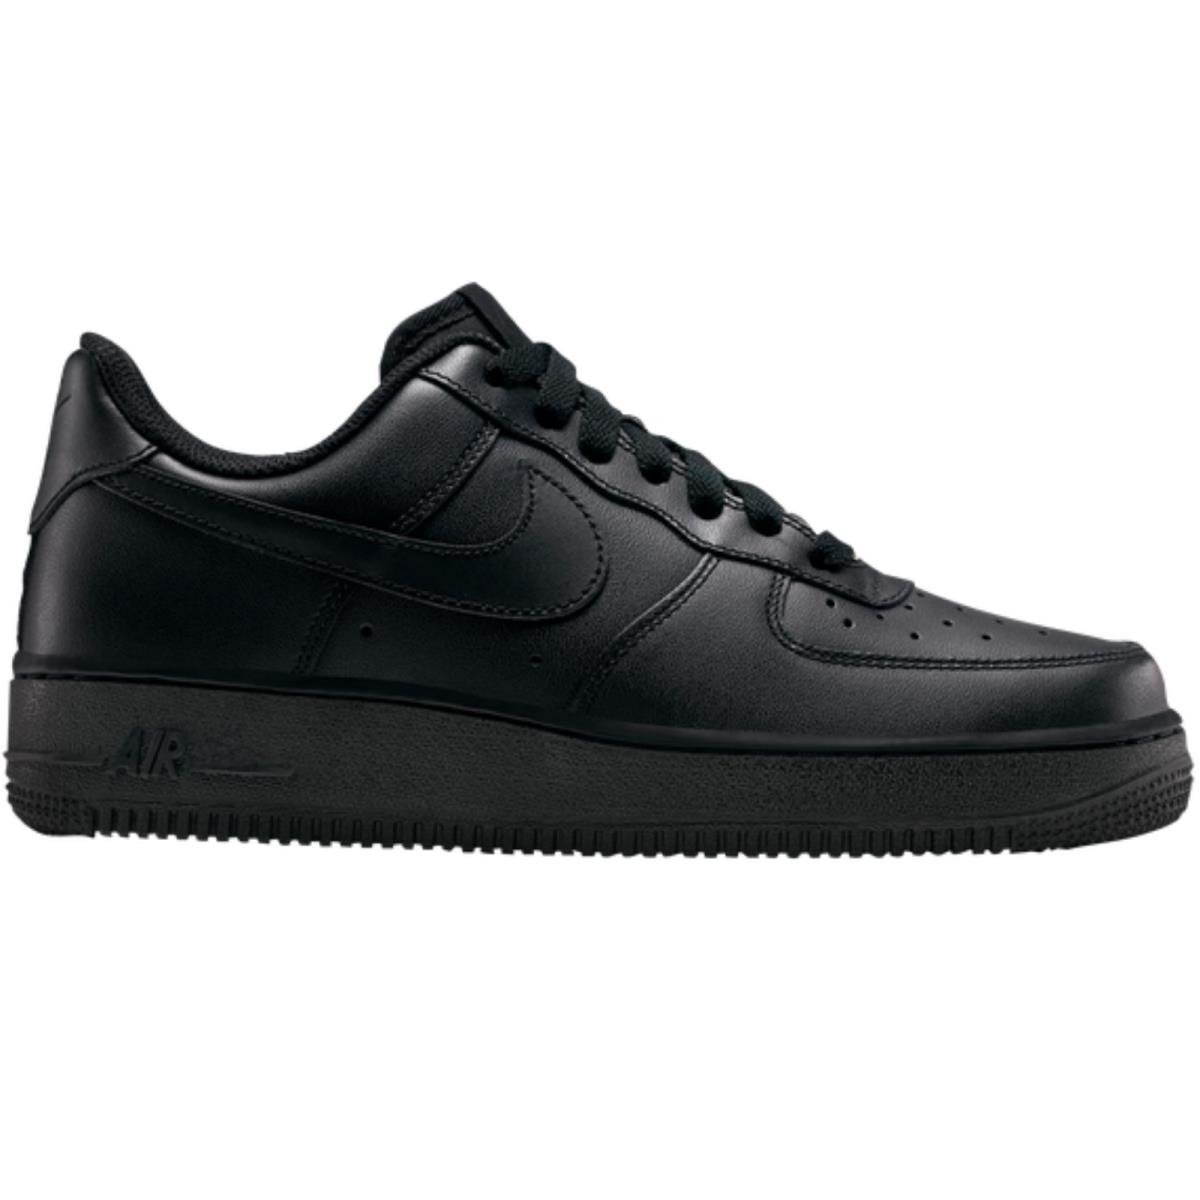 Nike Air Force 1 Women`s Casual Shoes All Colors US Sizes 6-11 Black/Black/Black/Black